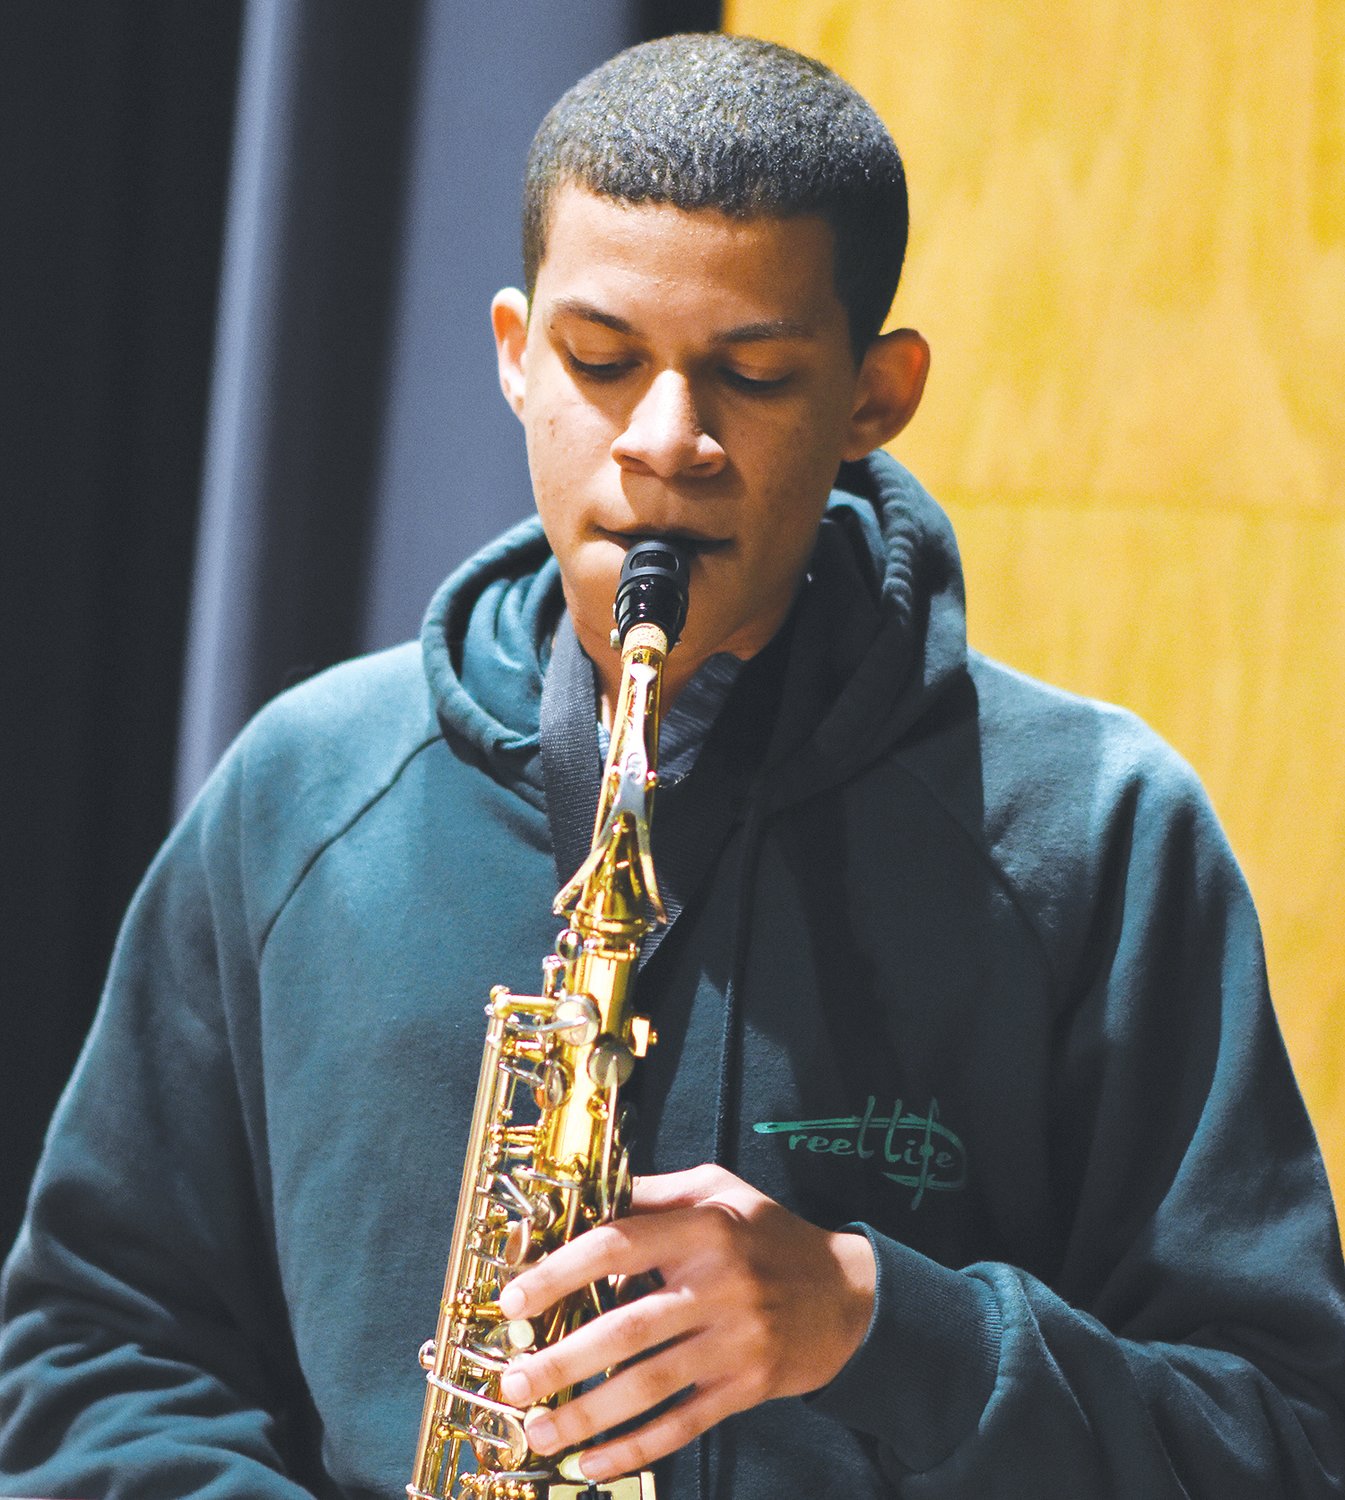 Ellis Pomales, RFA student, plays the saxophone (Teacher Jacob Meiss).